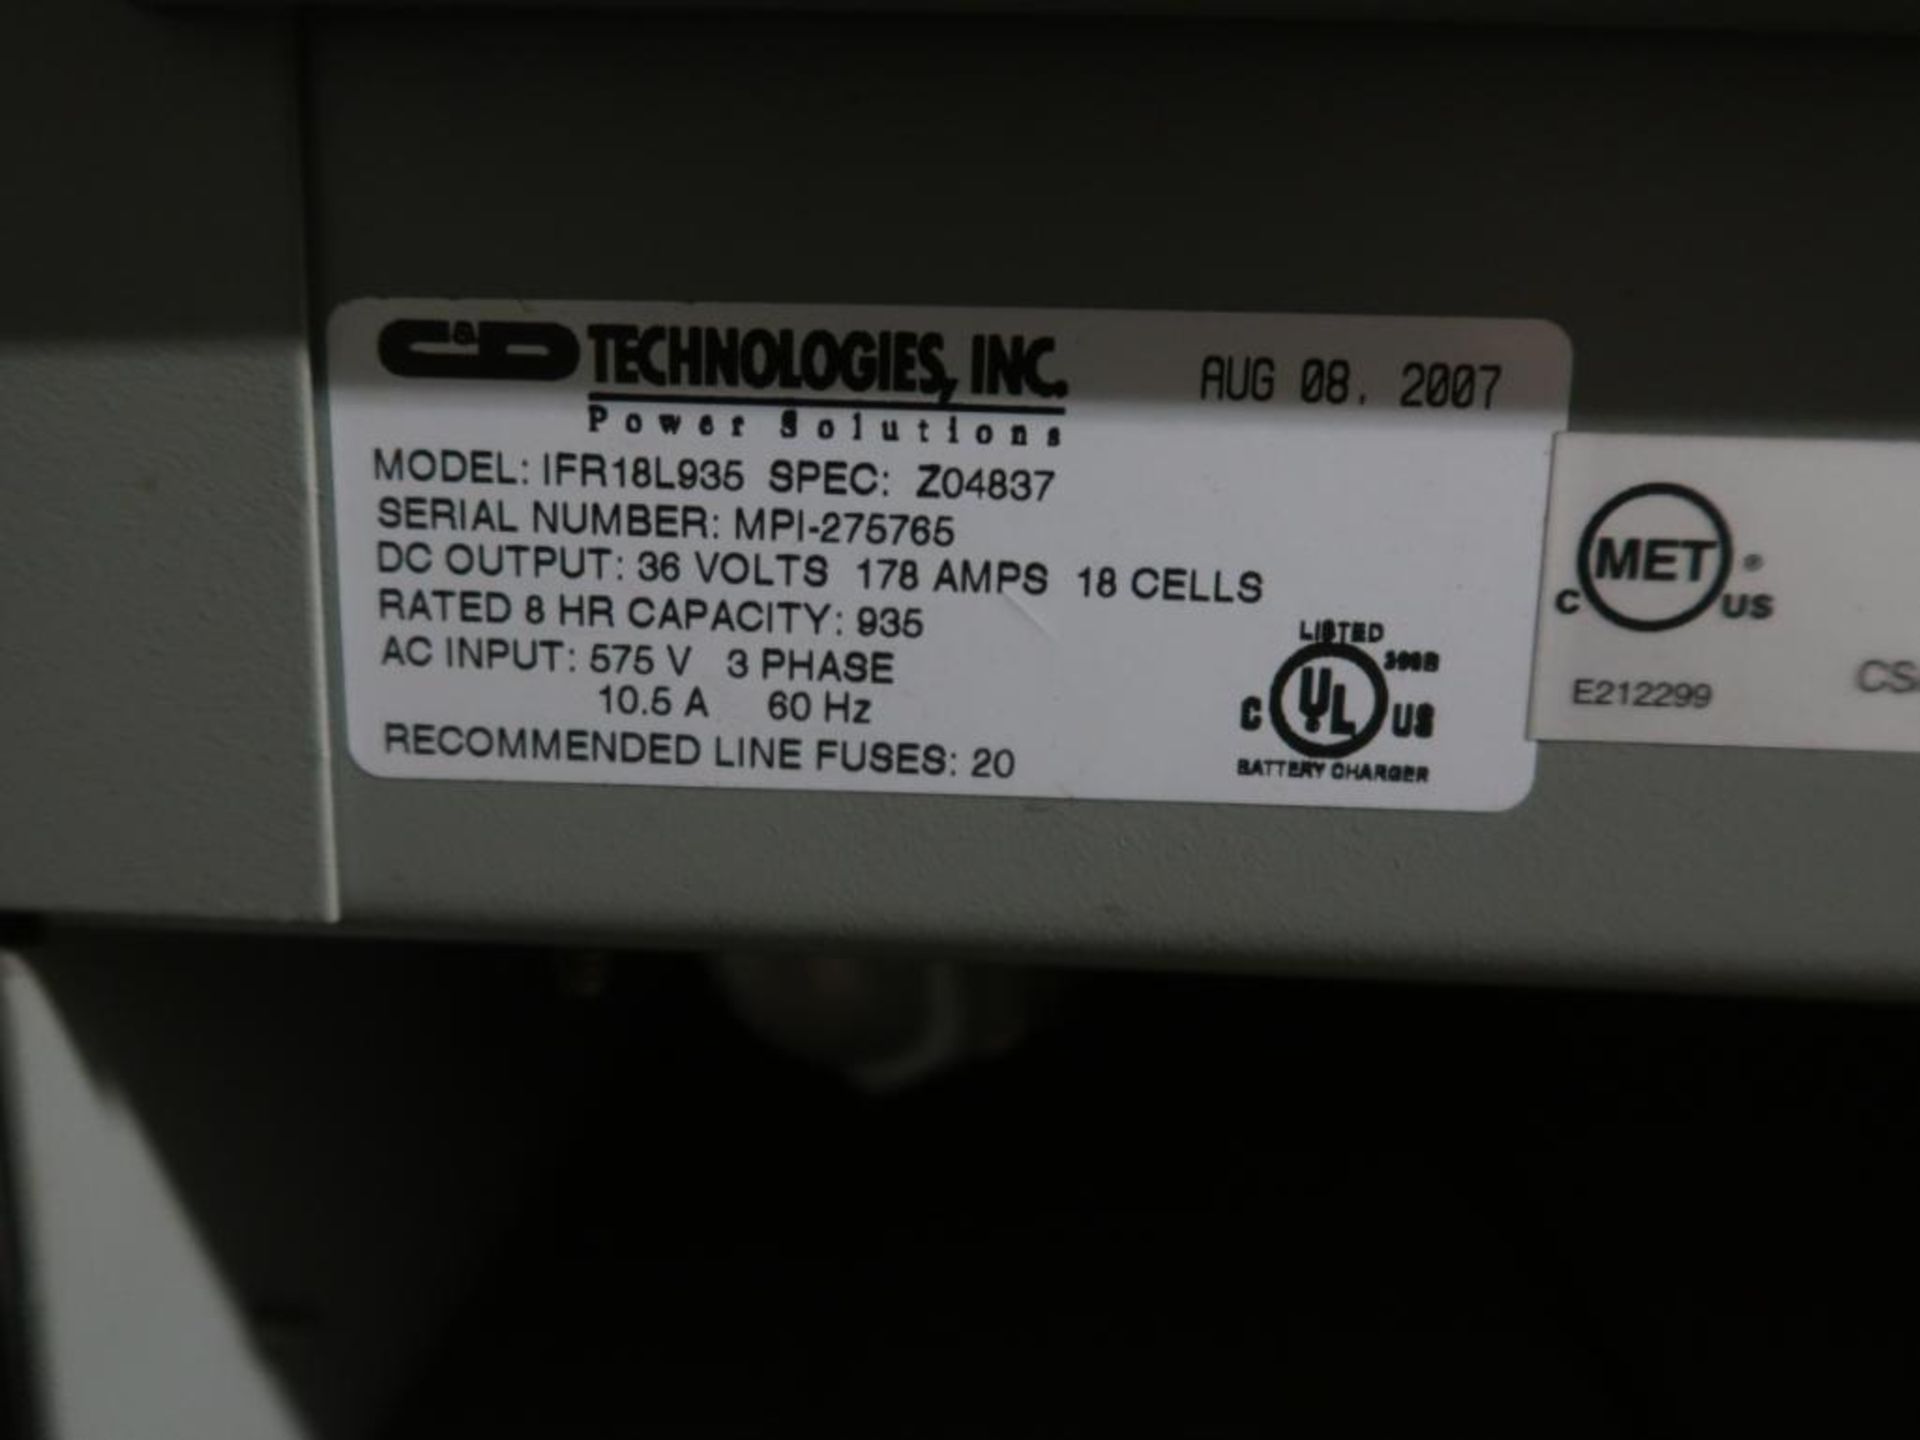 CD Technologies Battery Charger Model IFR18L1000, 36 Volt - Image 2 of 2